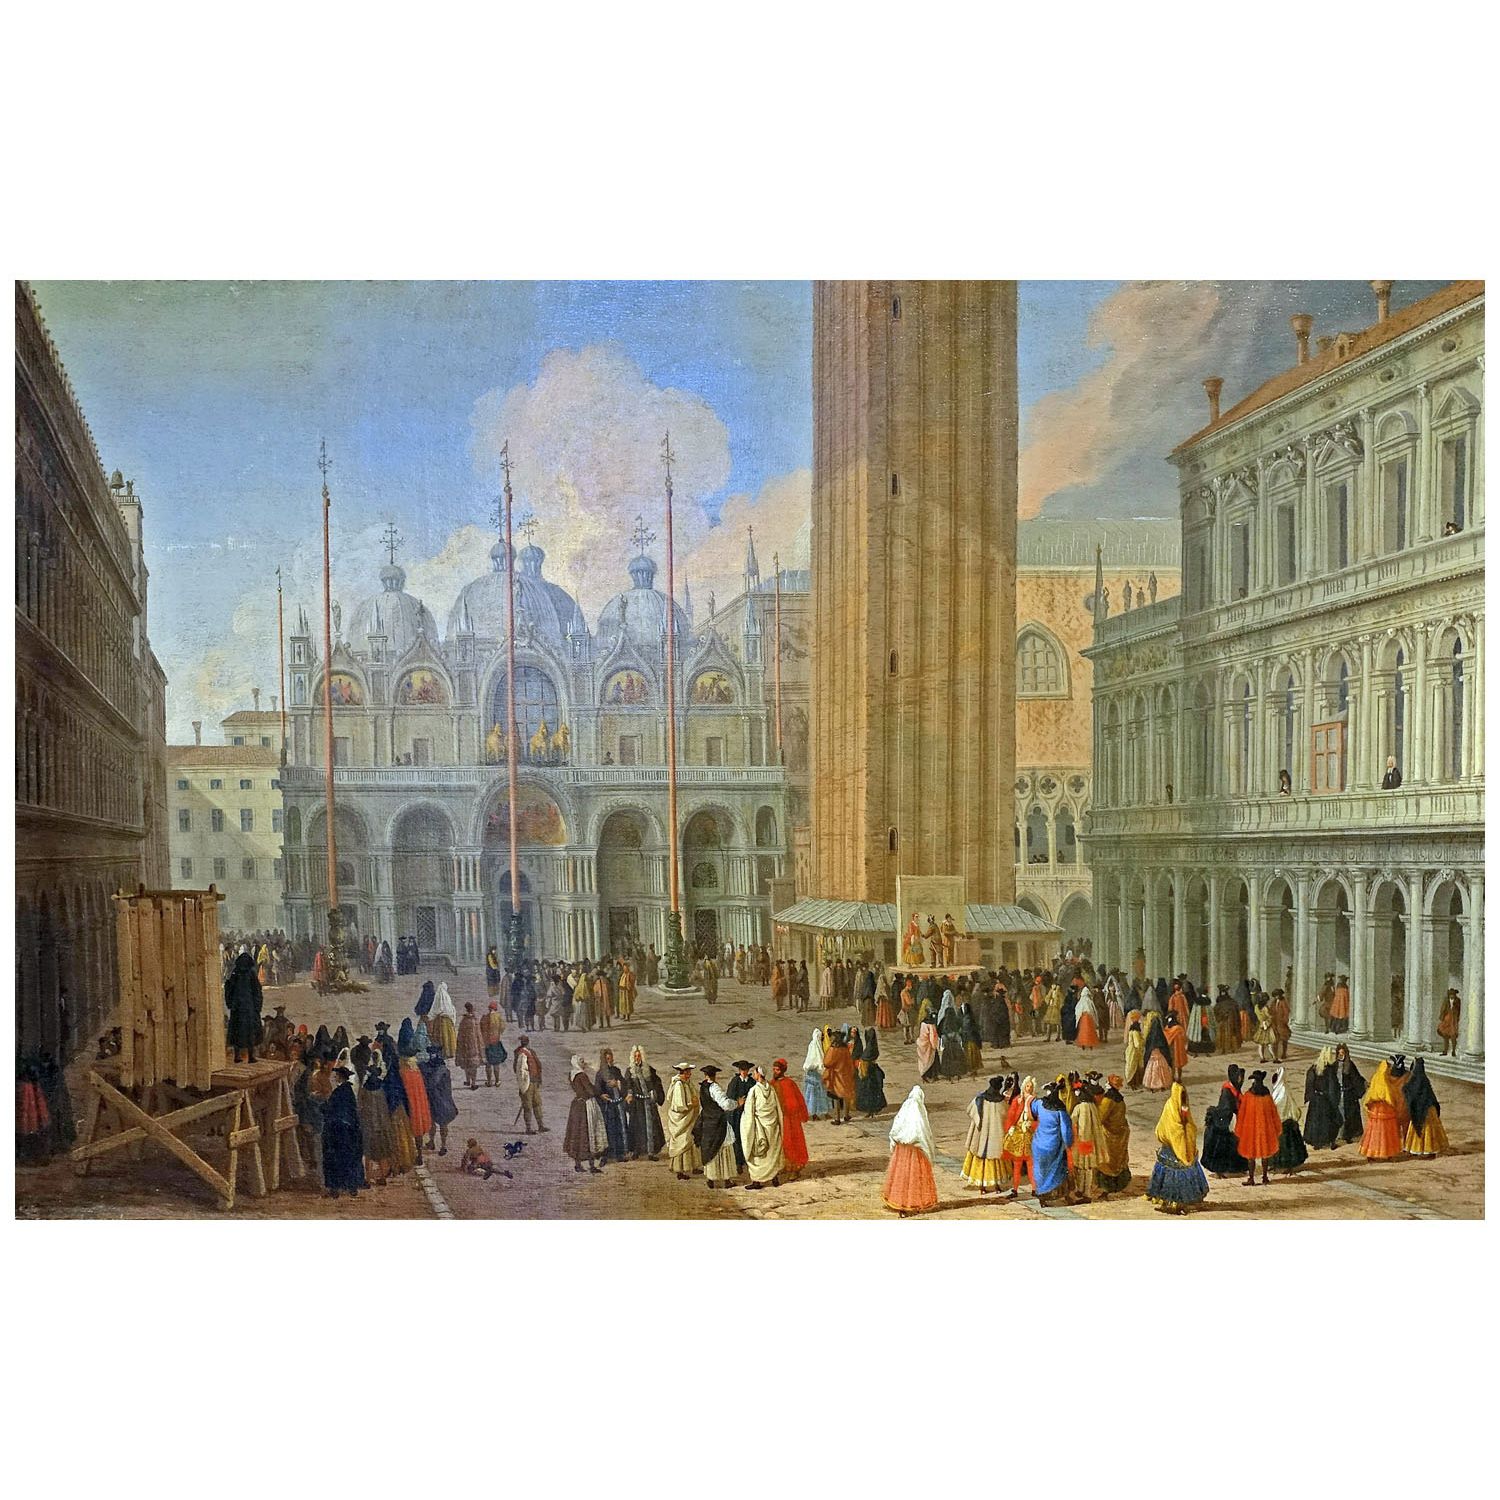 Luca Carlevarijs. Bacino di fronte a Palazzo Ducale. 1720. Schloss Sanssouci